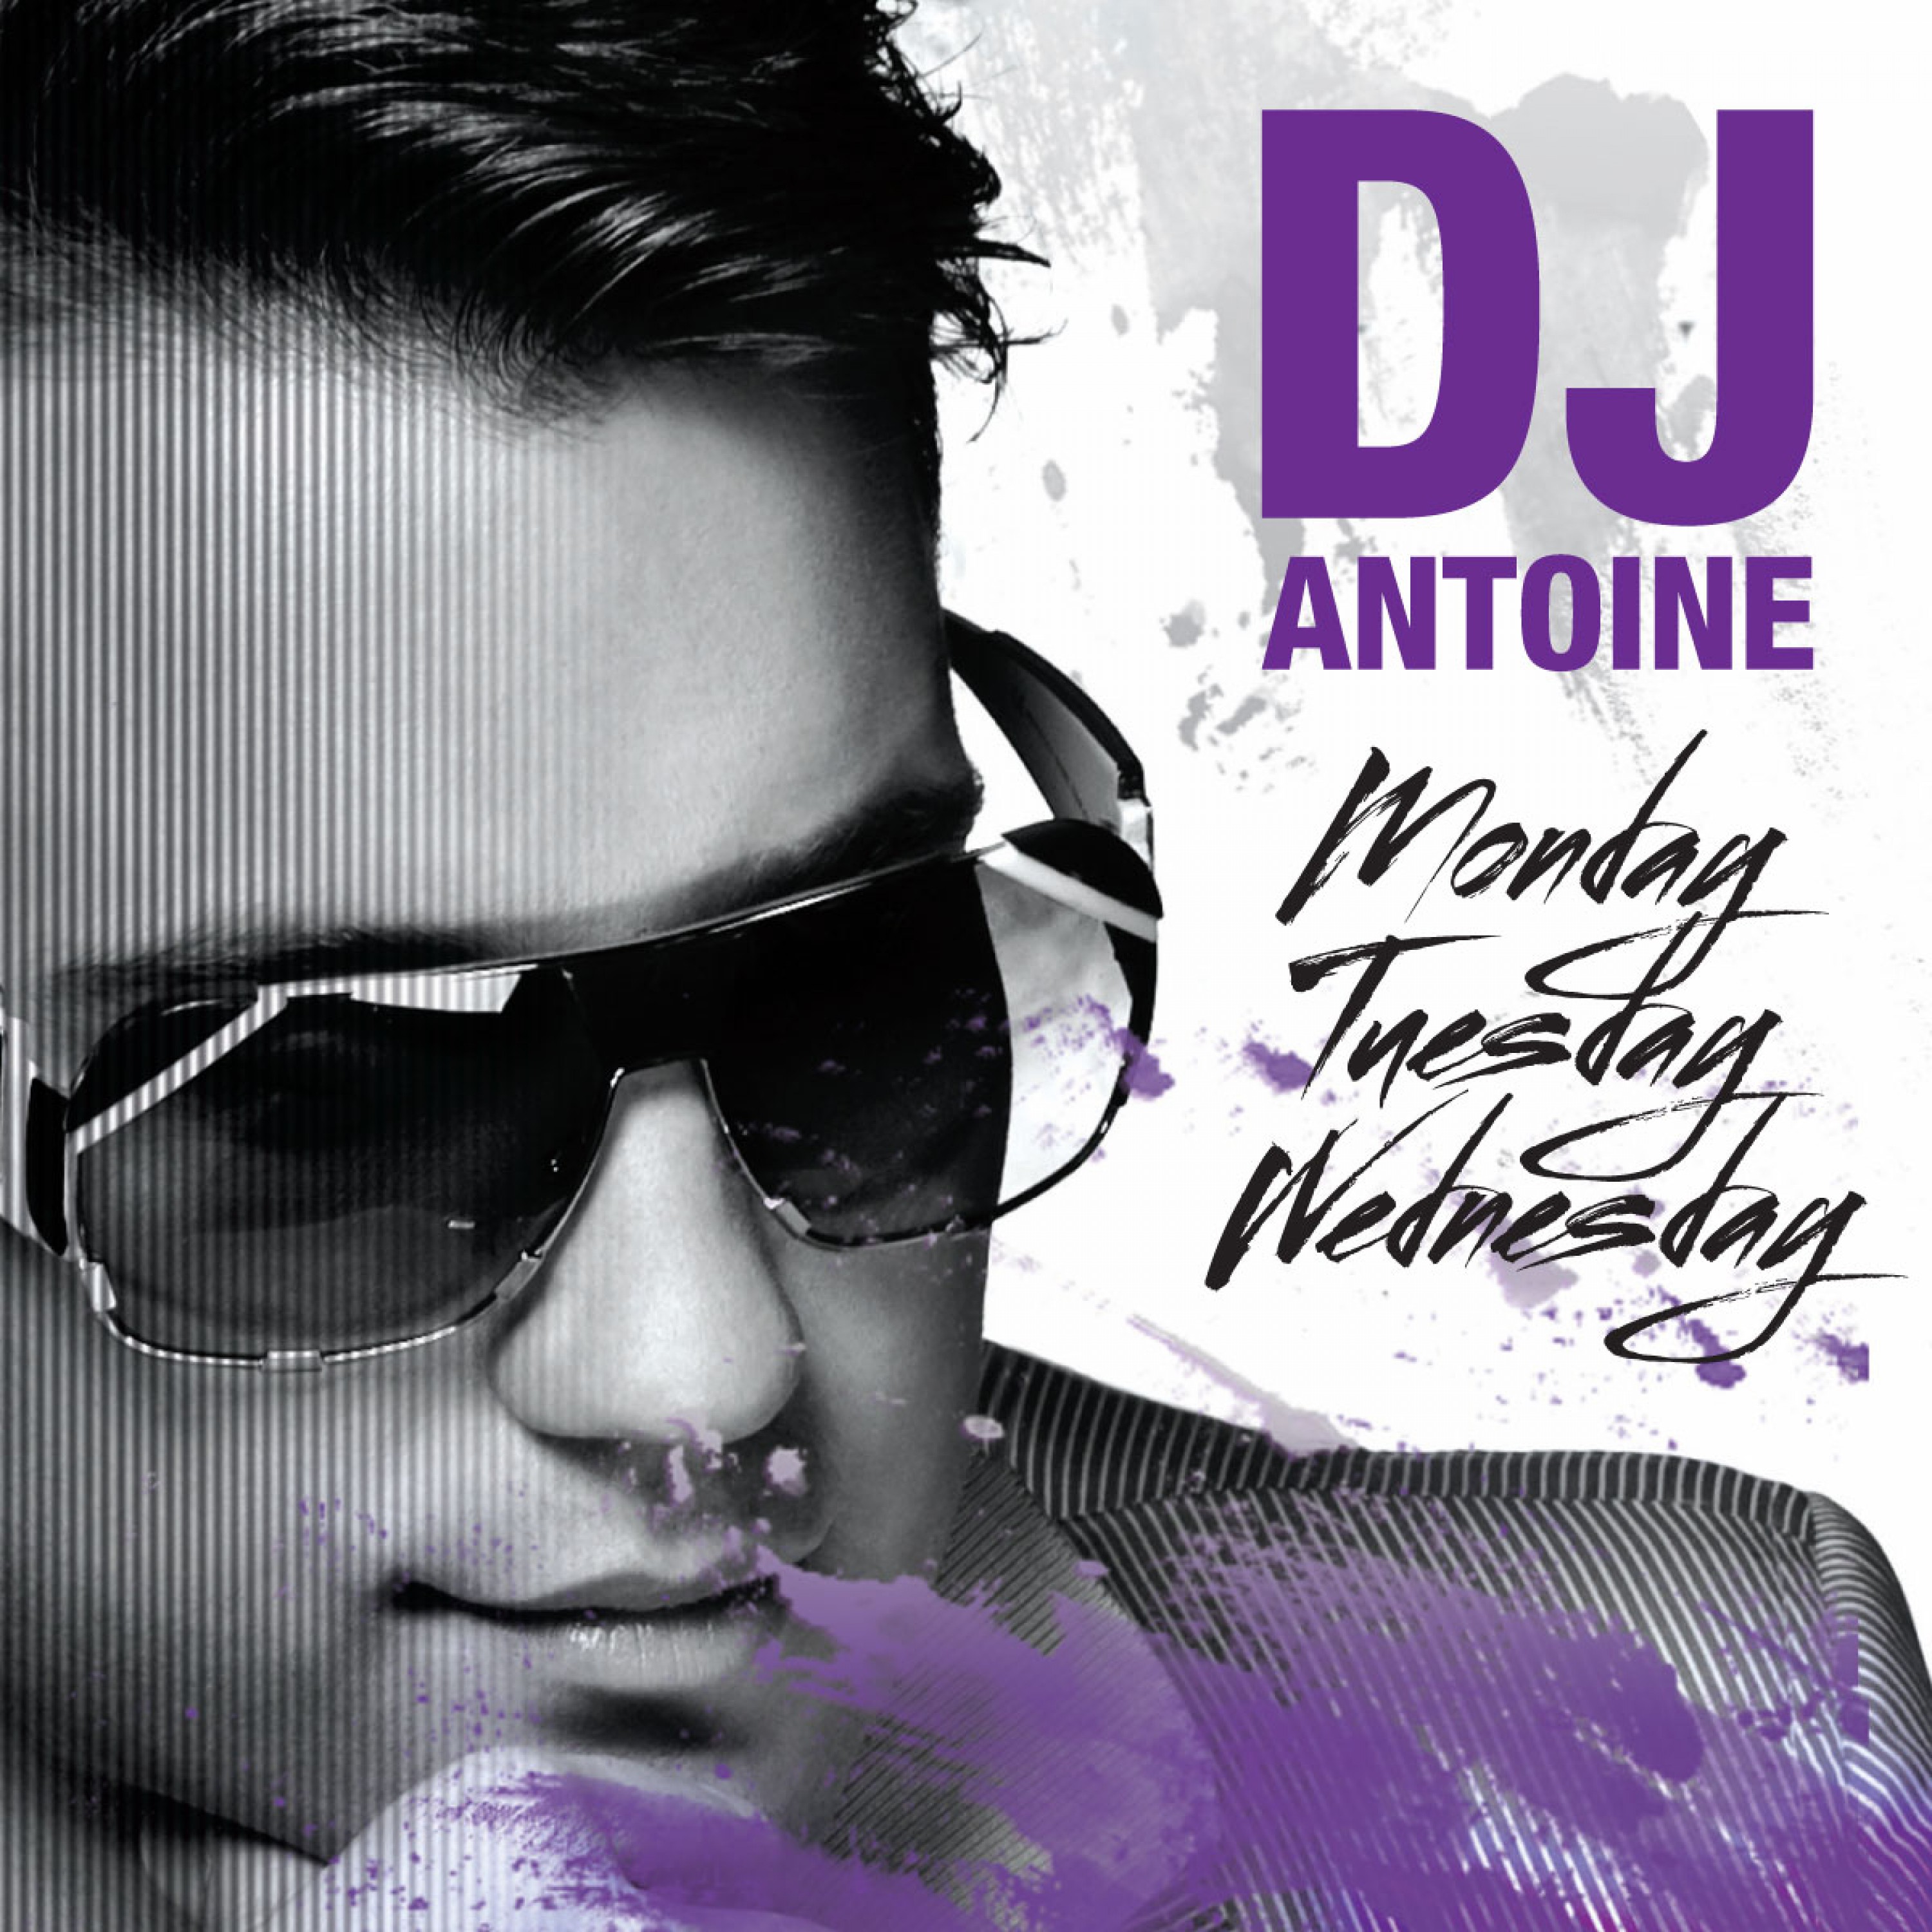 Monday, Tuesday, Wednesday (DJ Antoine vs Mad Mark Remix)